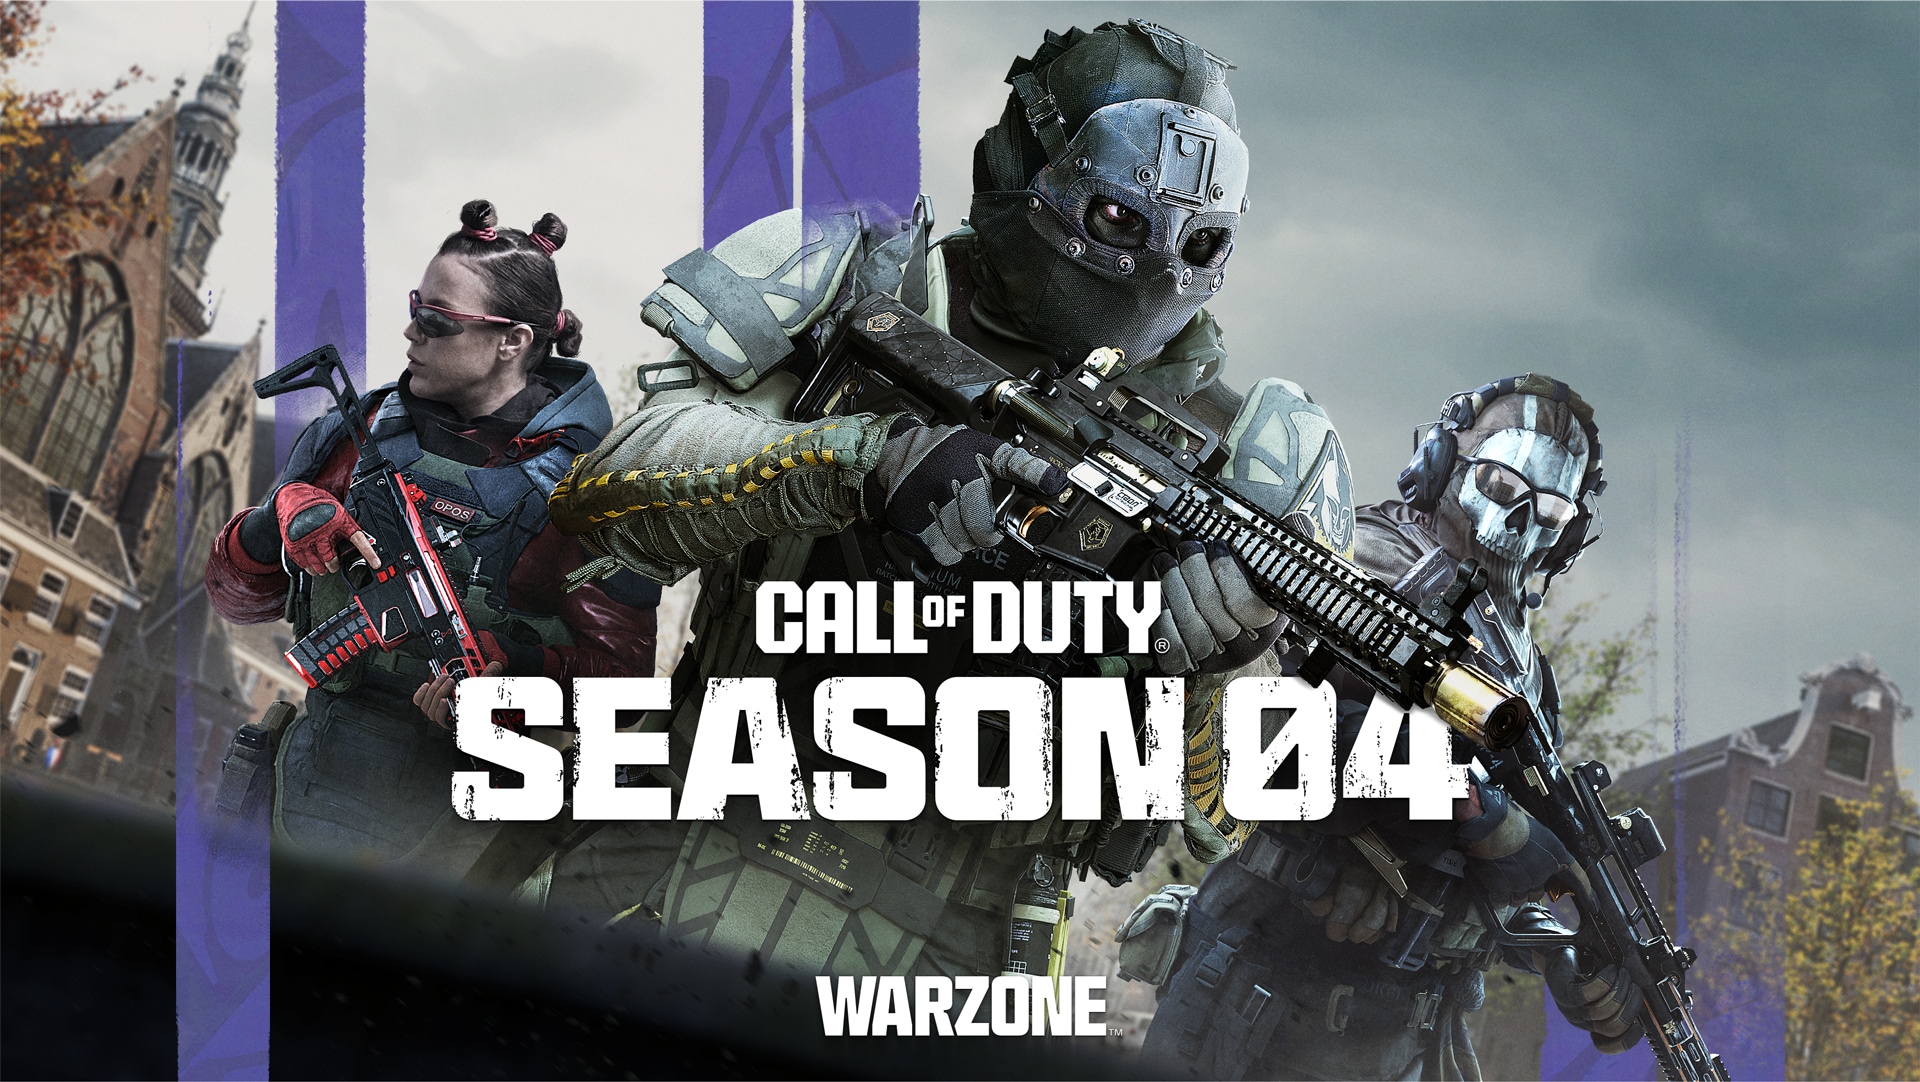 Fight across new battlegrounds in Season 04 of Call of Duty: Modern Warfare II and Call of Duty: Warzone, launching June 14